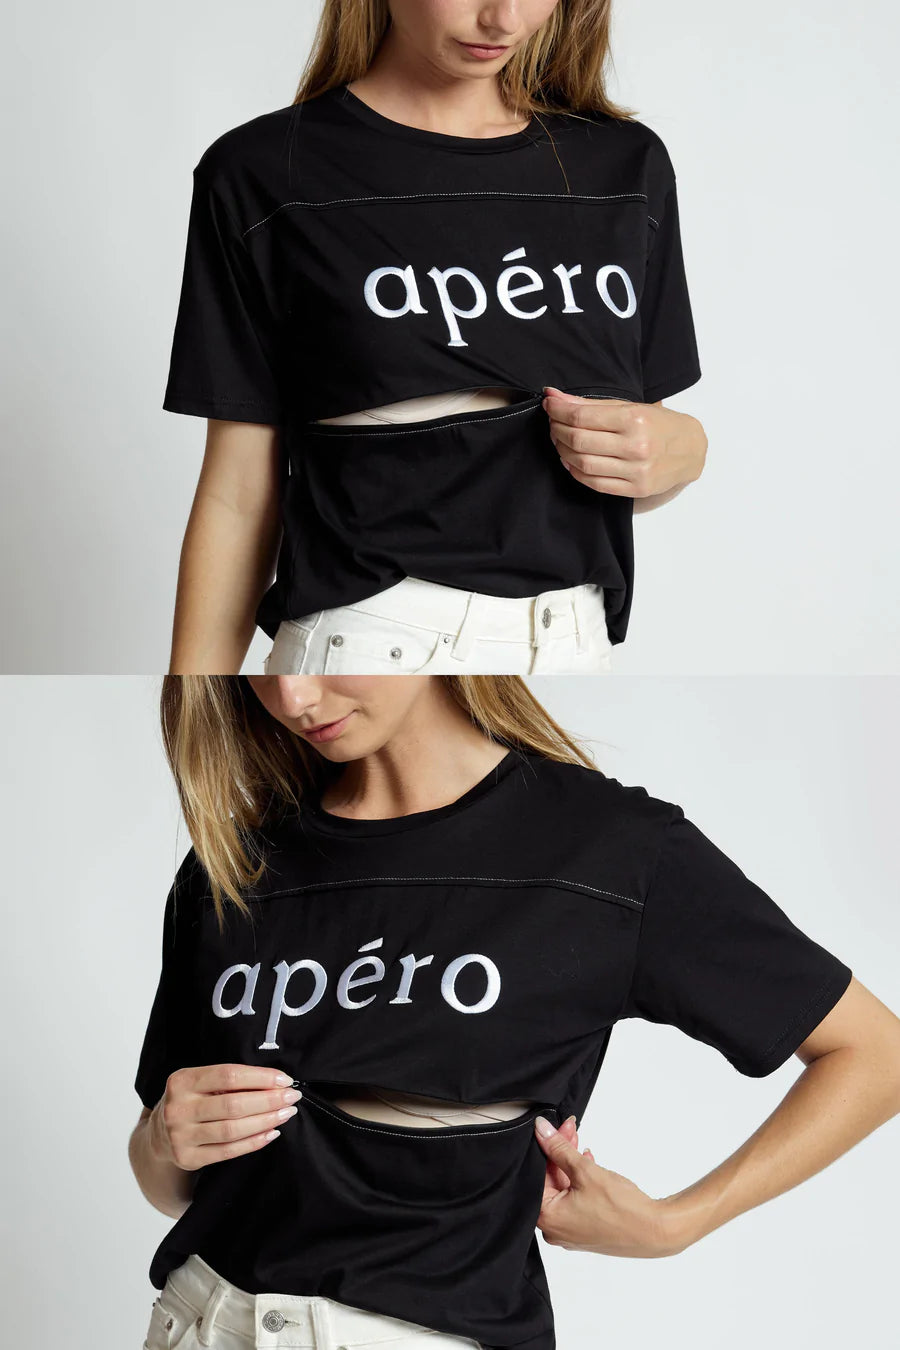 Apero - Duel Panel Embroidered Breastfeeding Tee Black/White